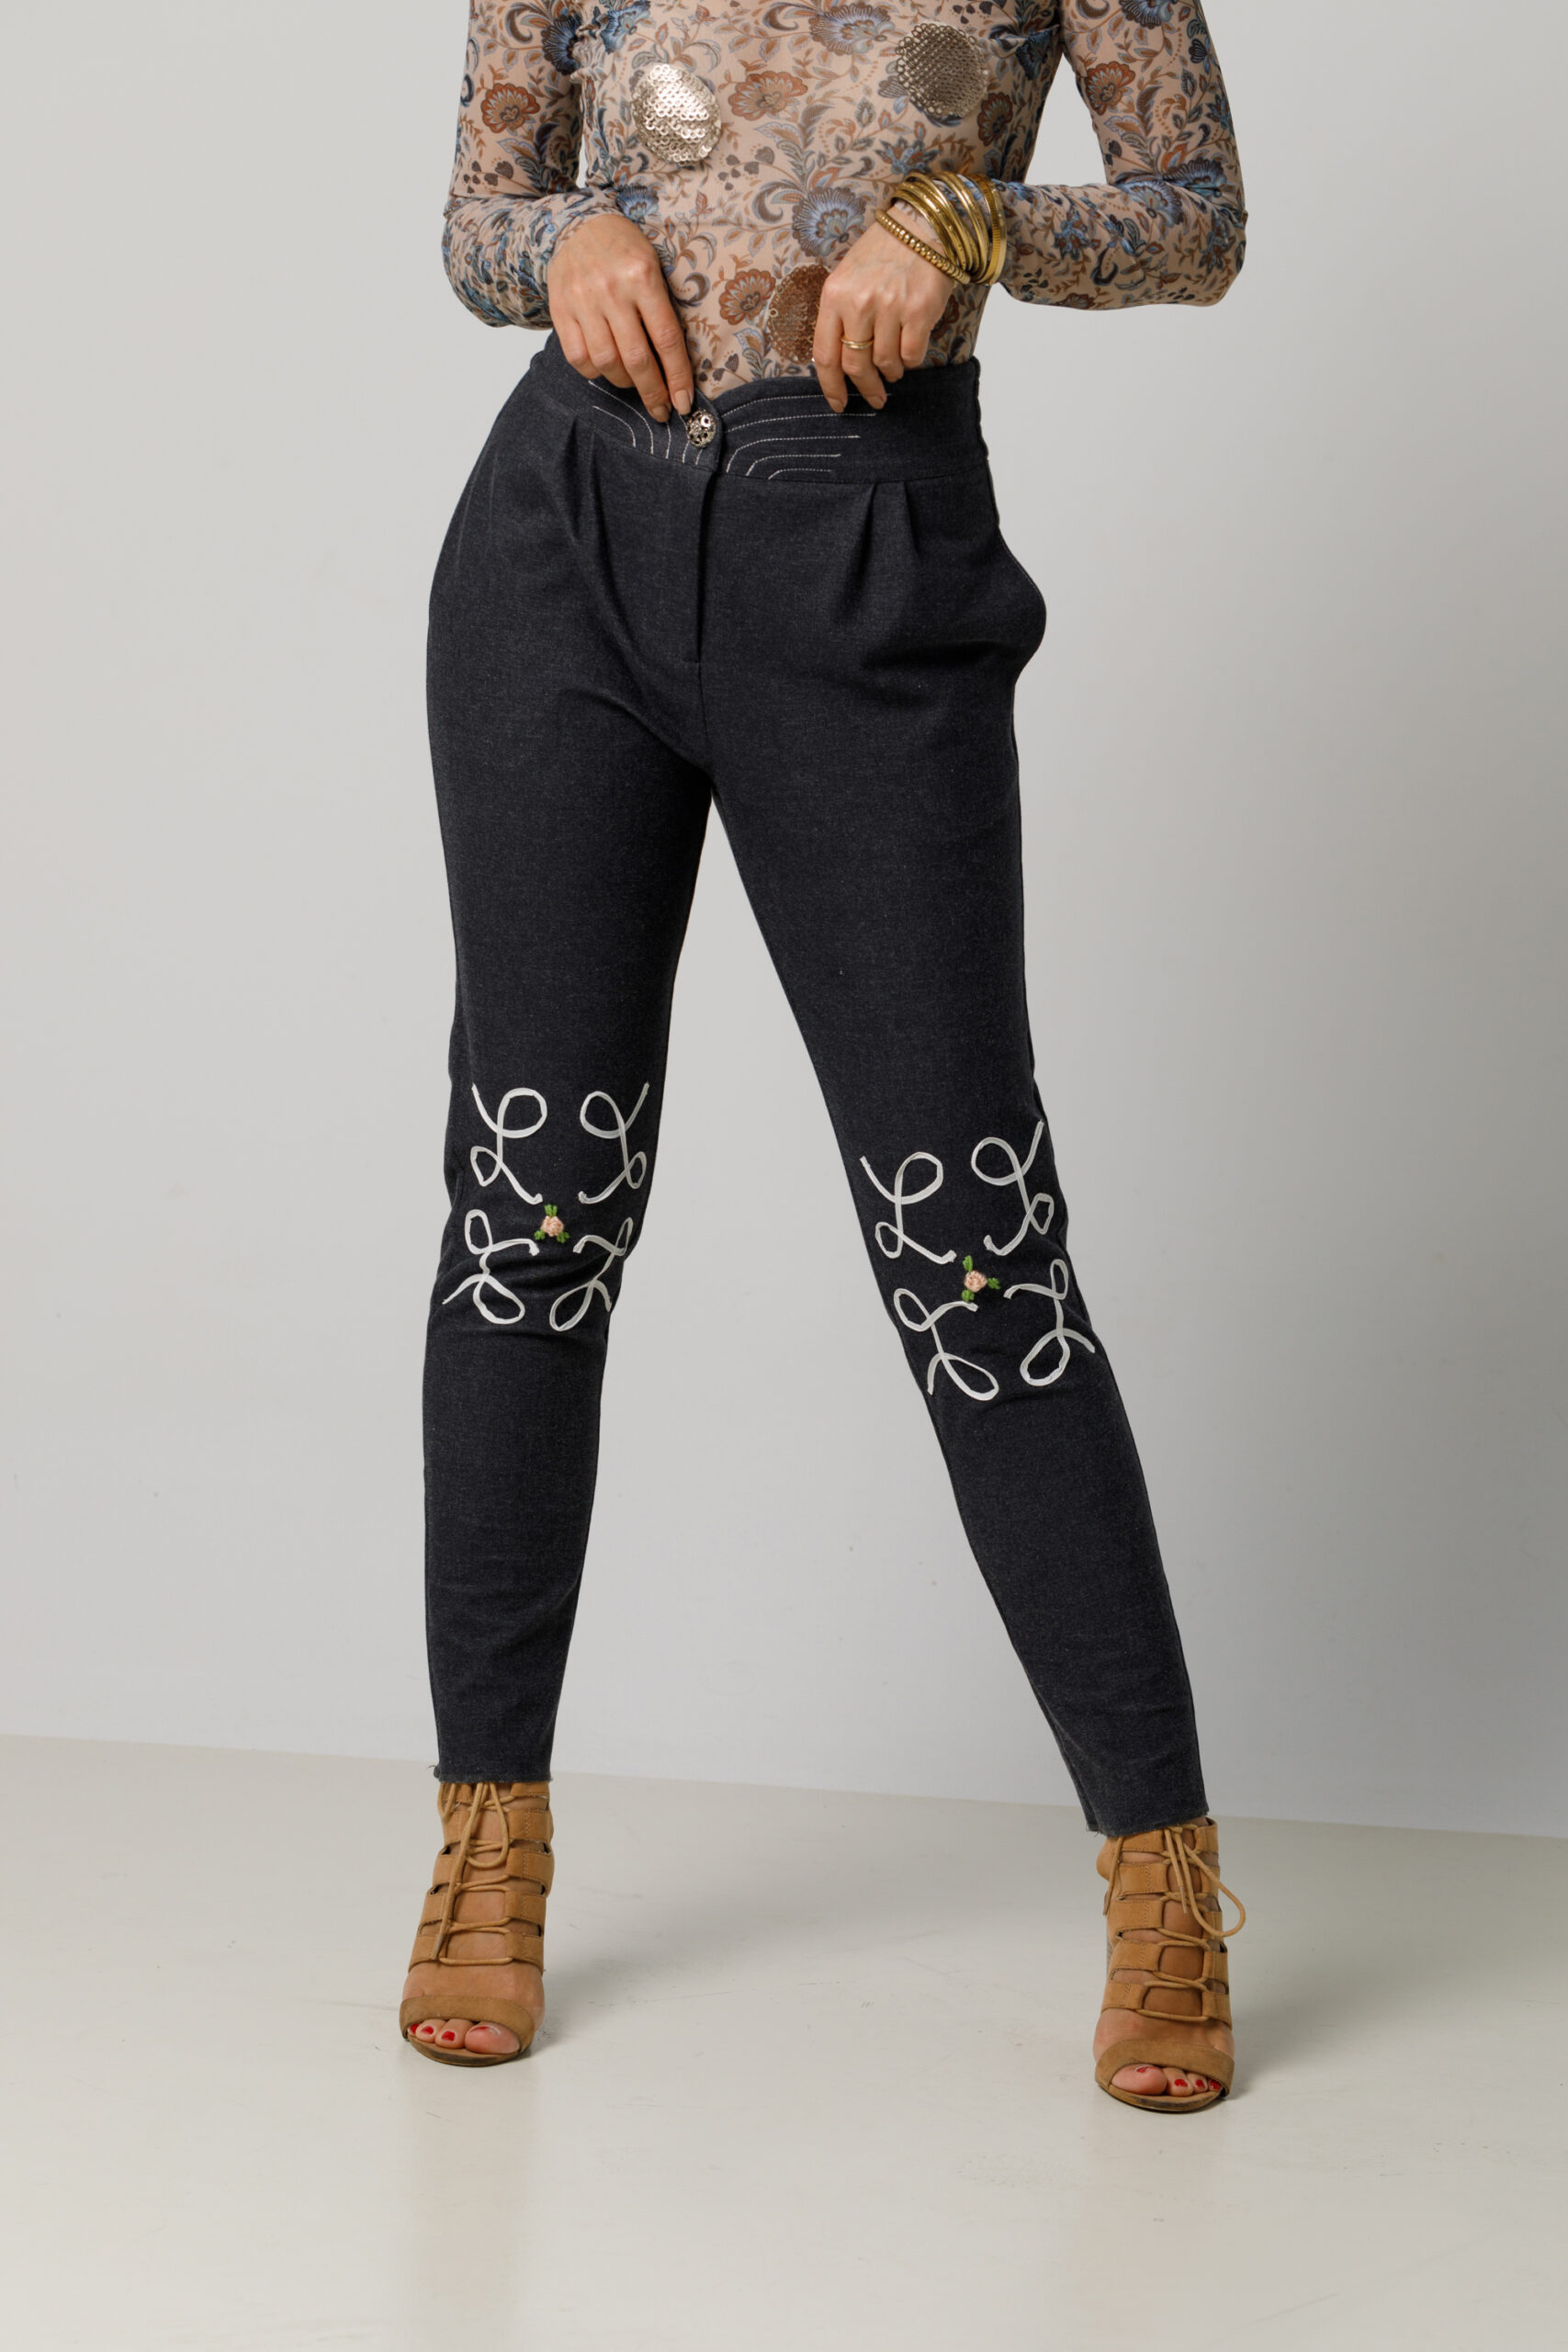 SACSY Casual gray denim pants. Natural fabrics, original design, handmade embroidery